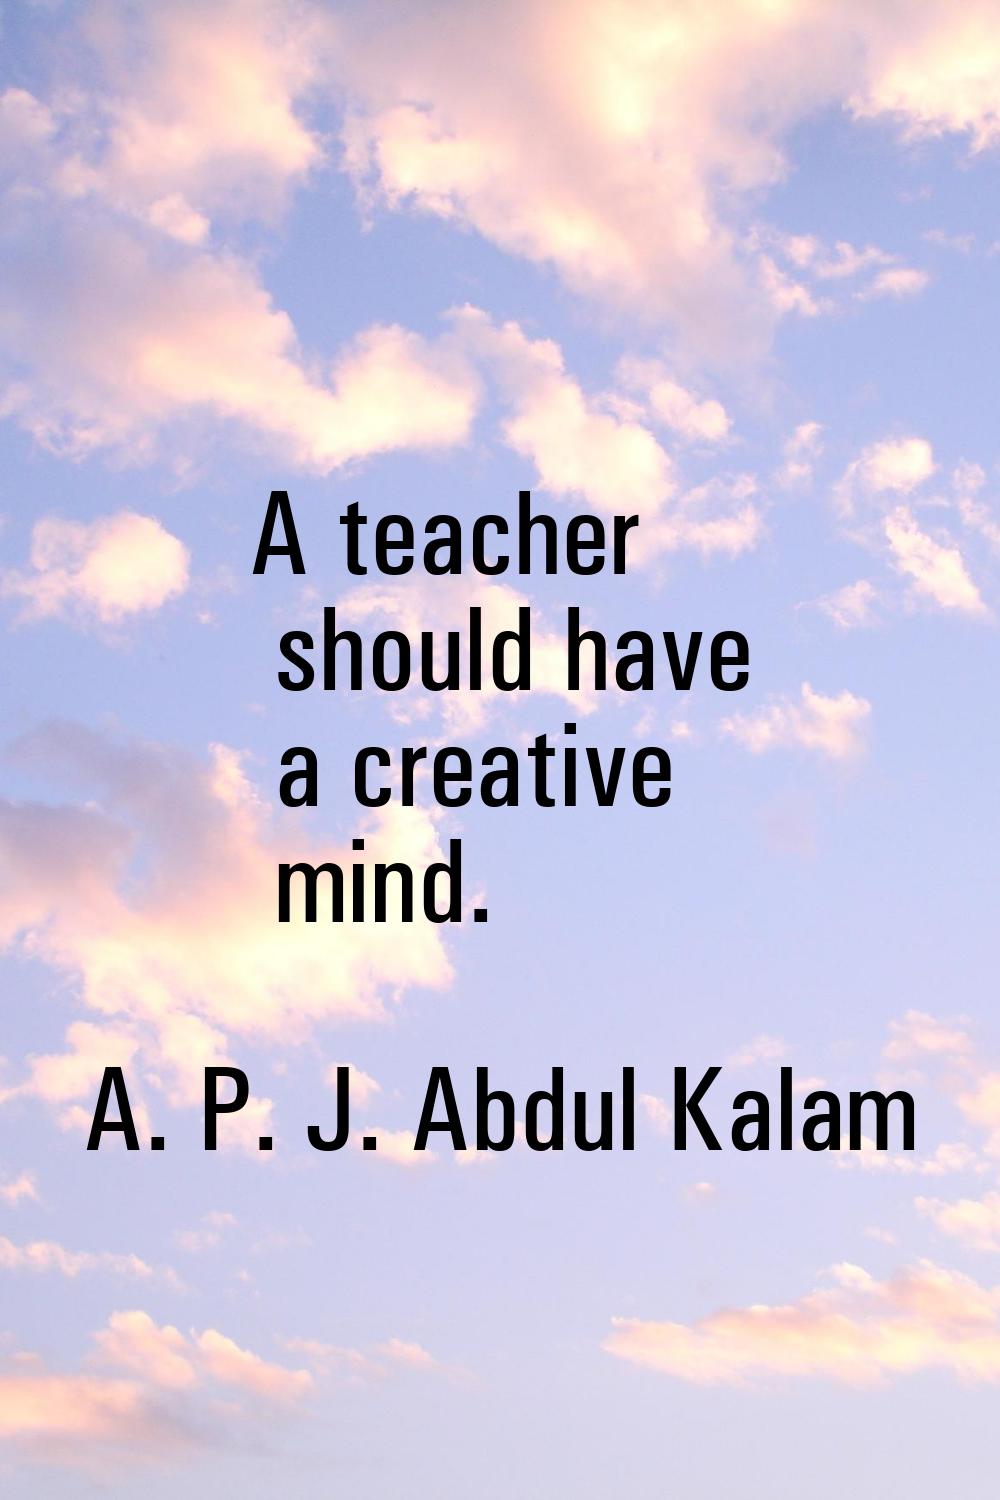 A teacher should have a creative mind.